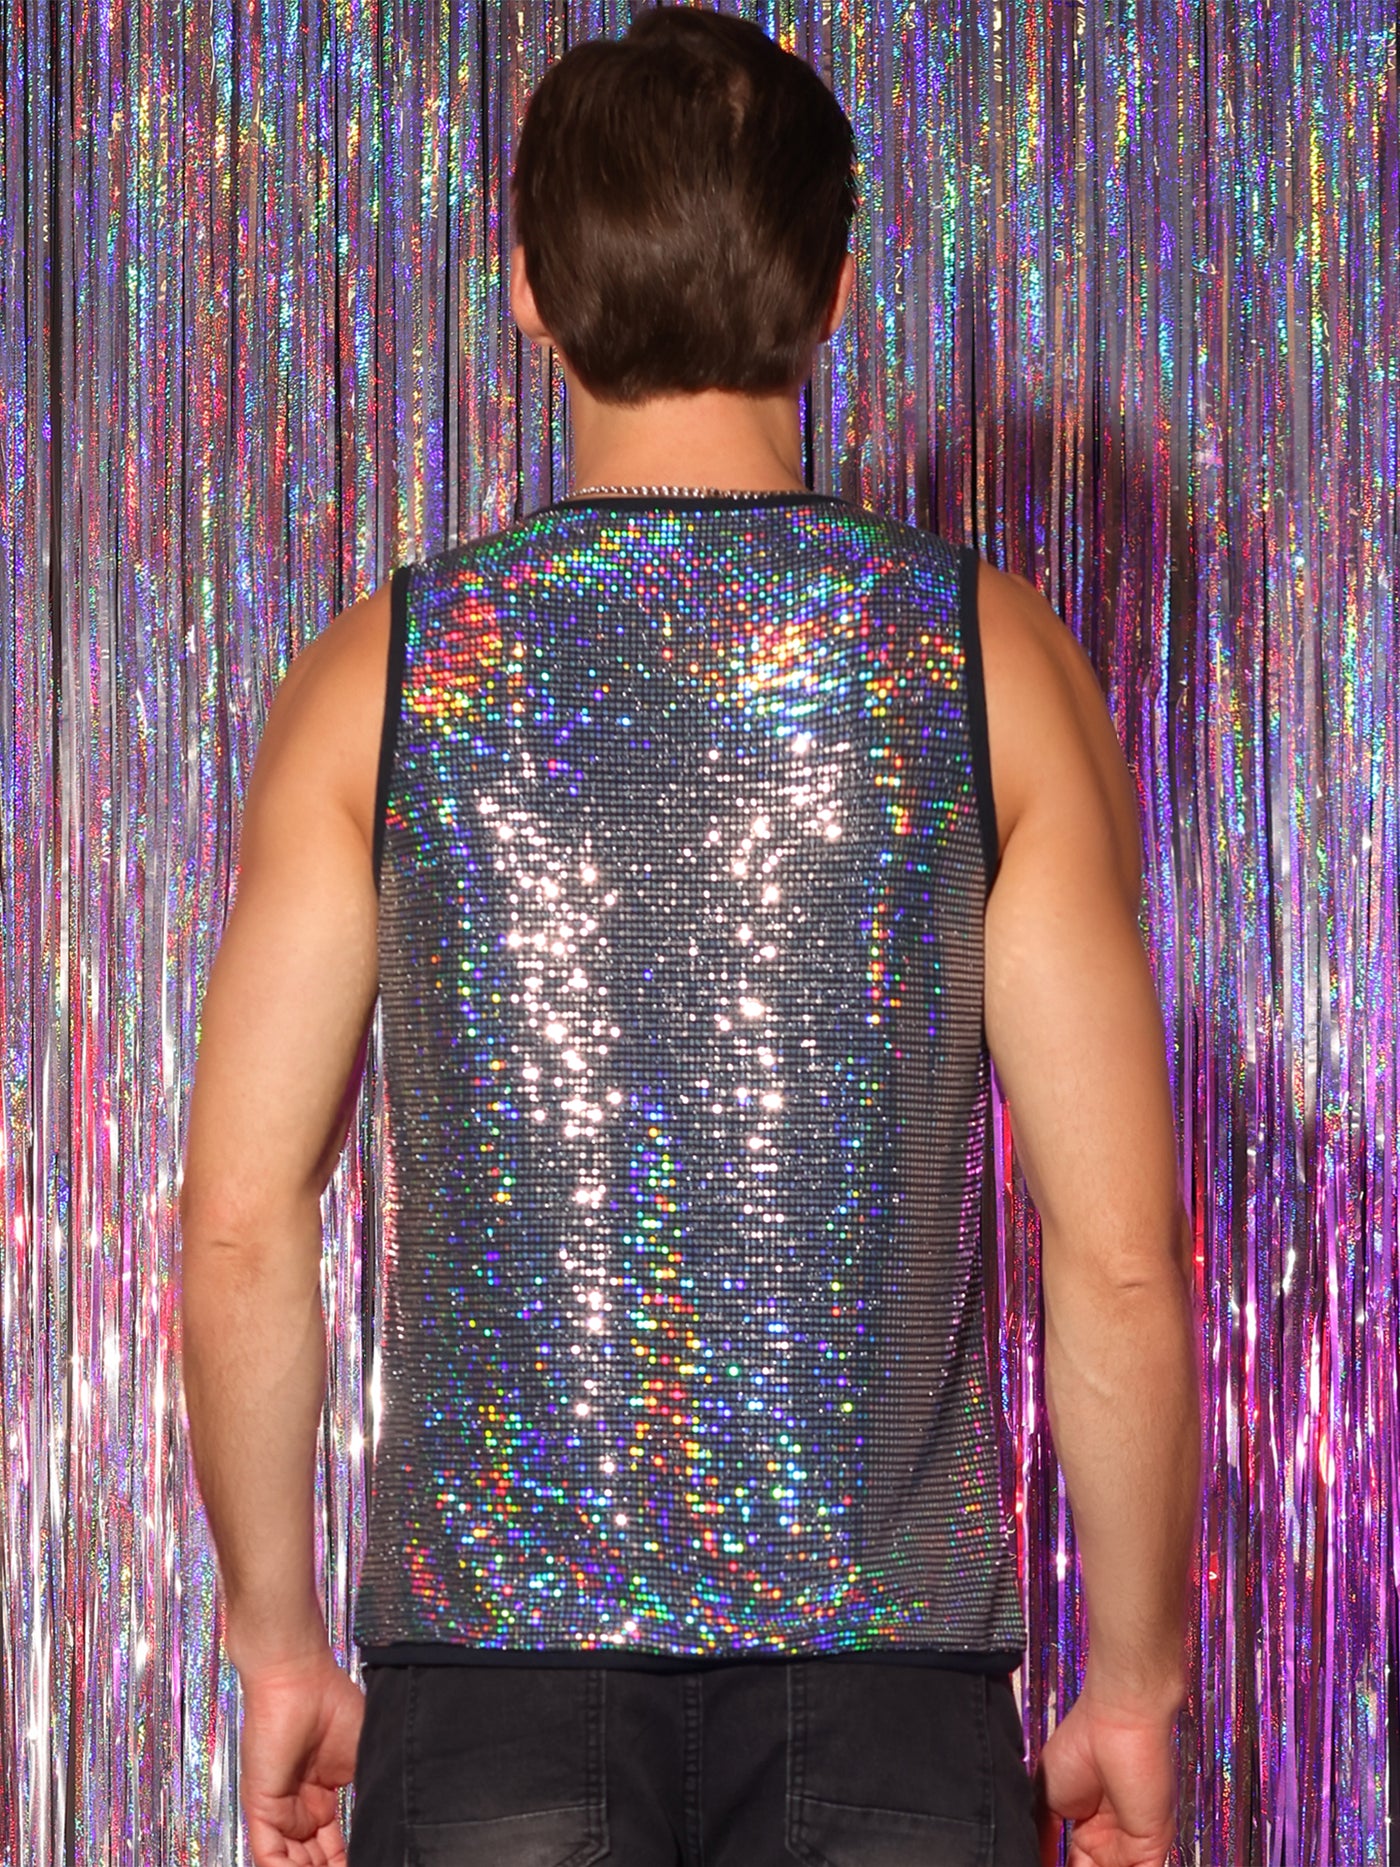 Bublédon Sequin Tank Top for Men's Shiny Nightclub Party Metallic Sleeveless T-Shirts